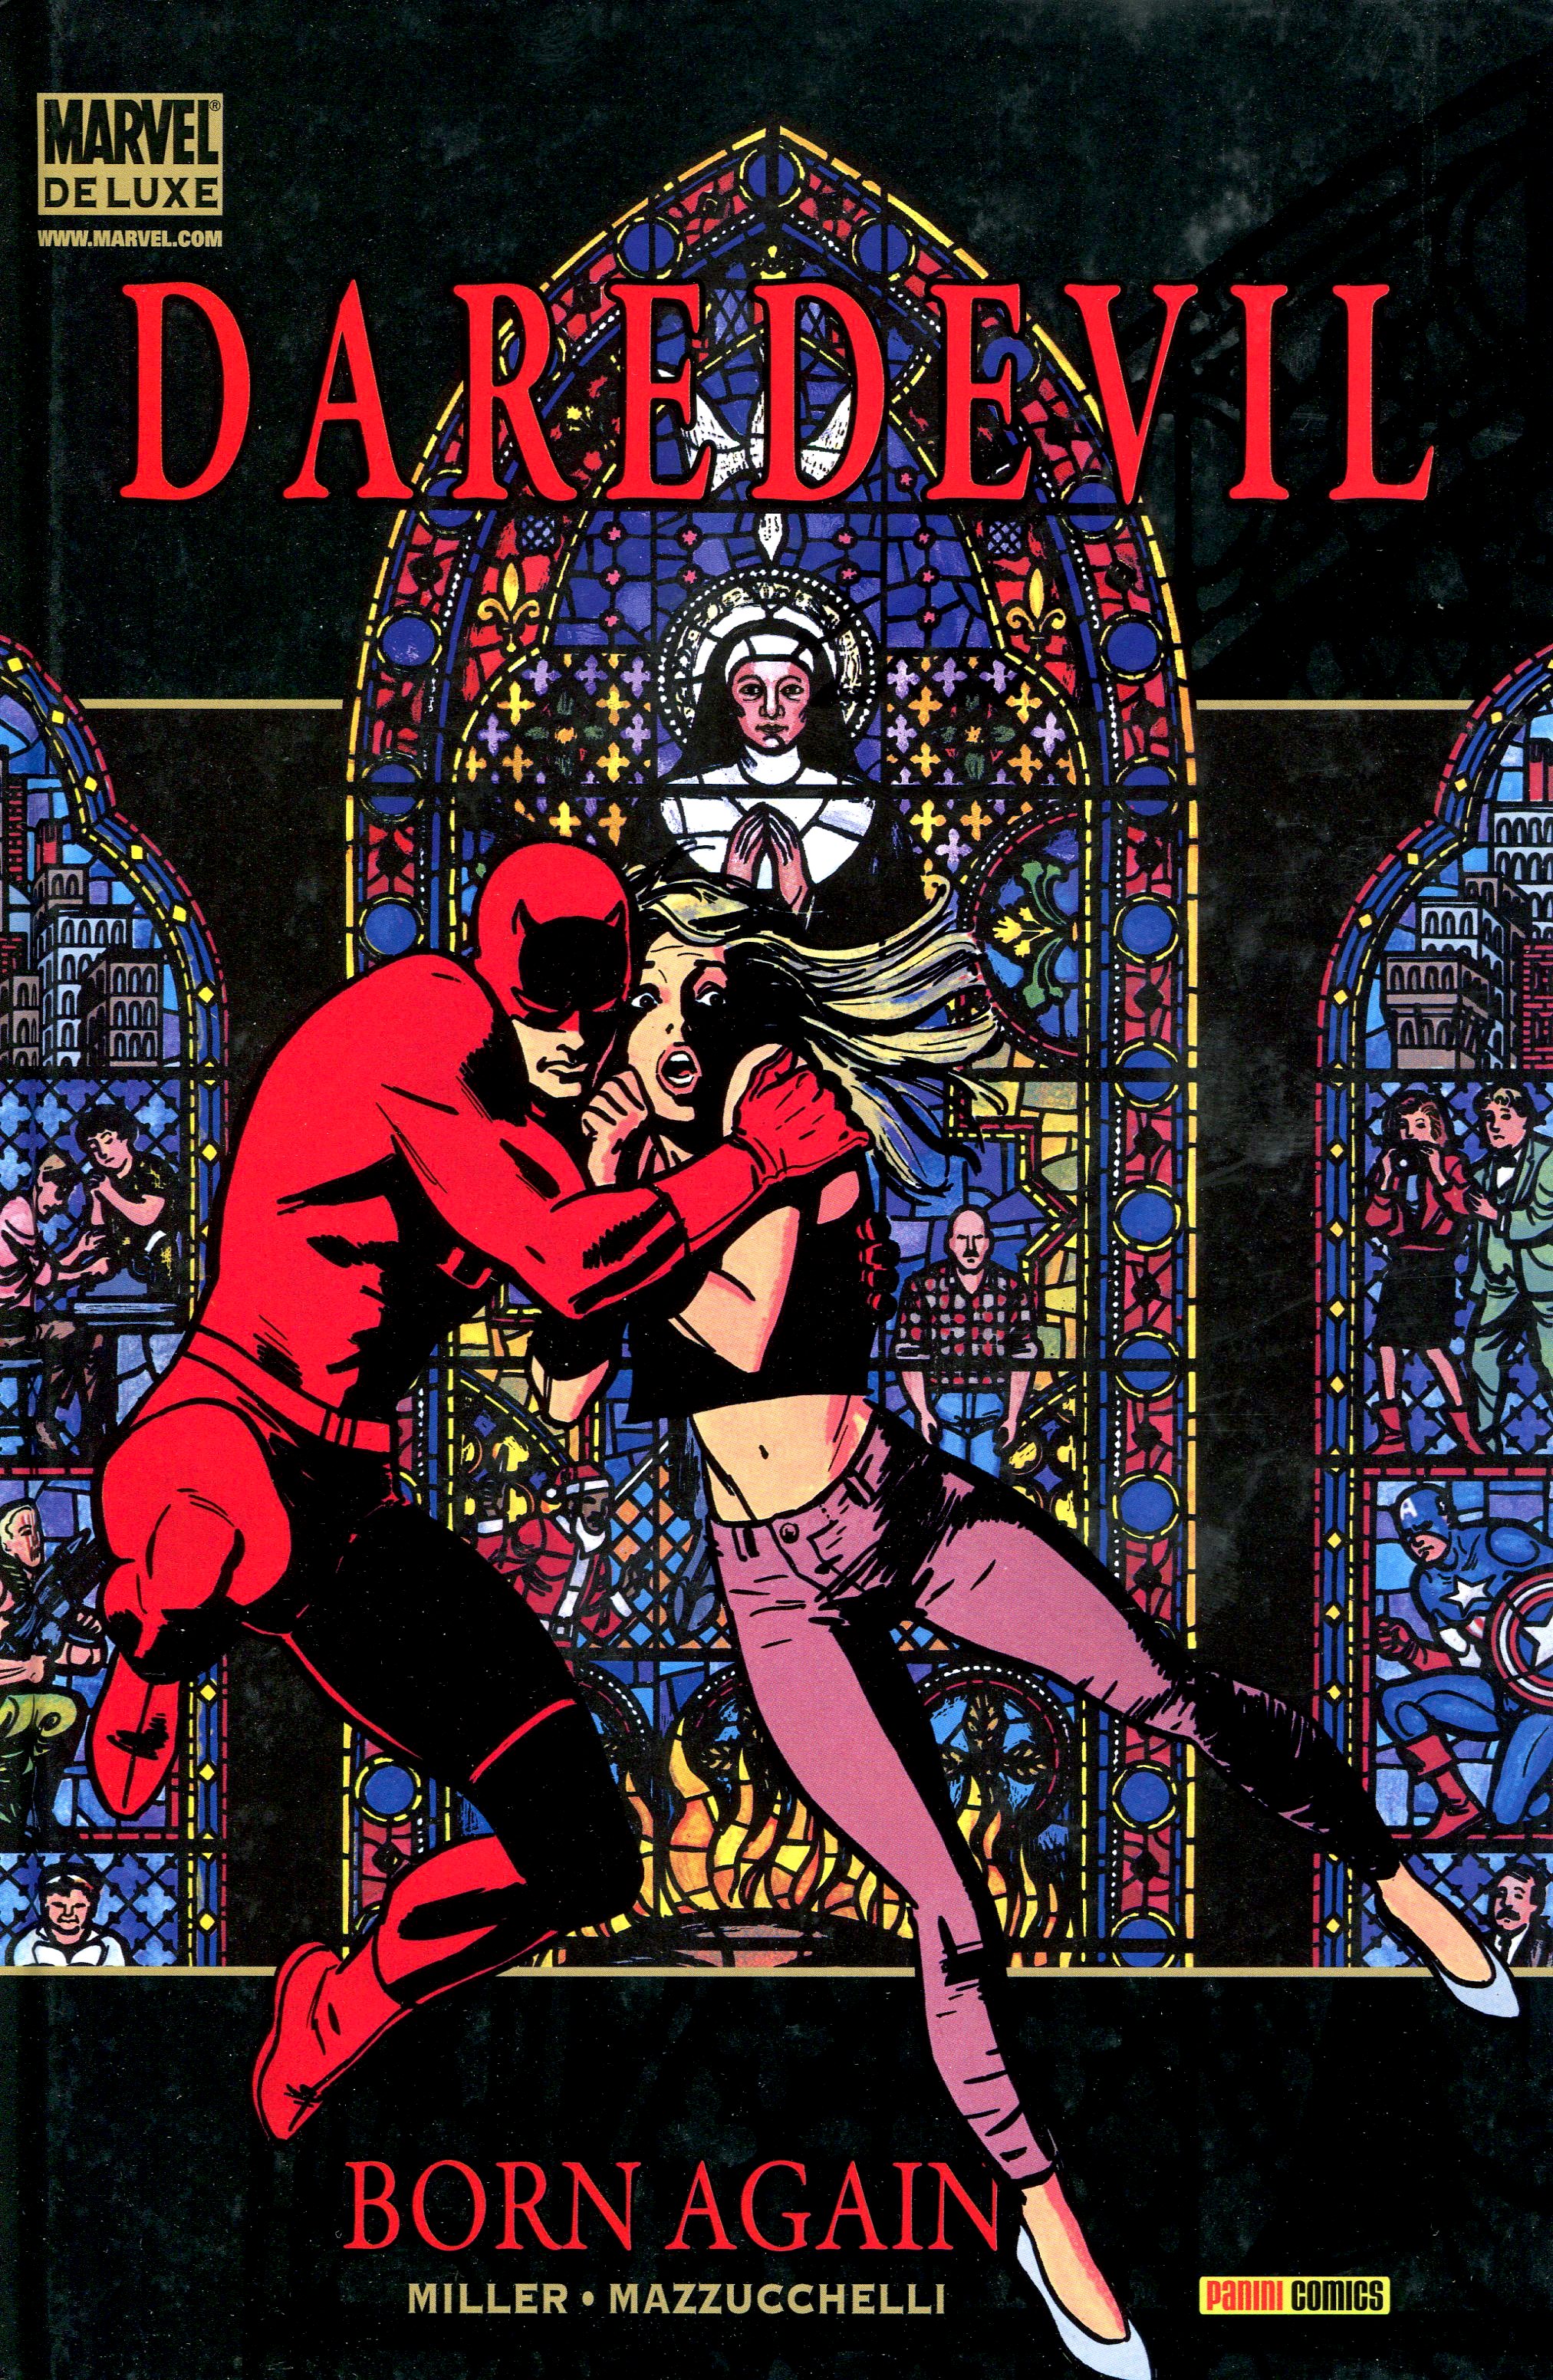 Daredevil, born again (1987, Marvel Comics)